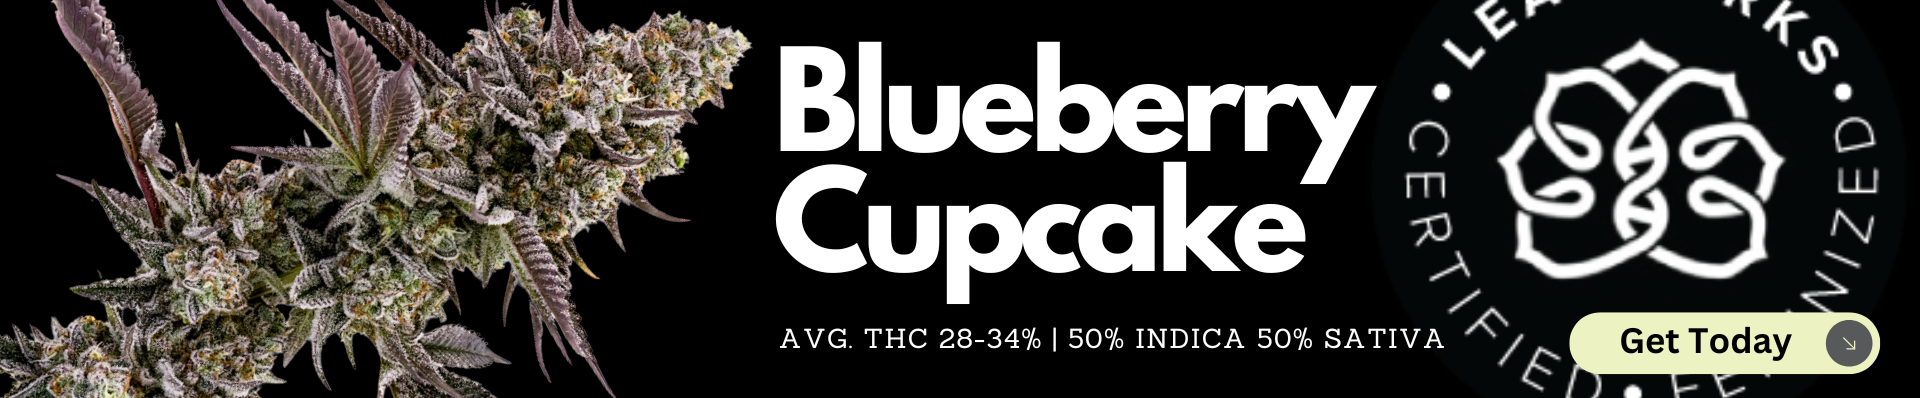 BLUEBERRY CUPCAKE
